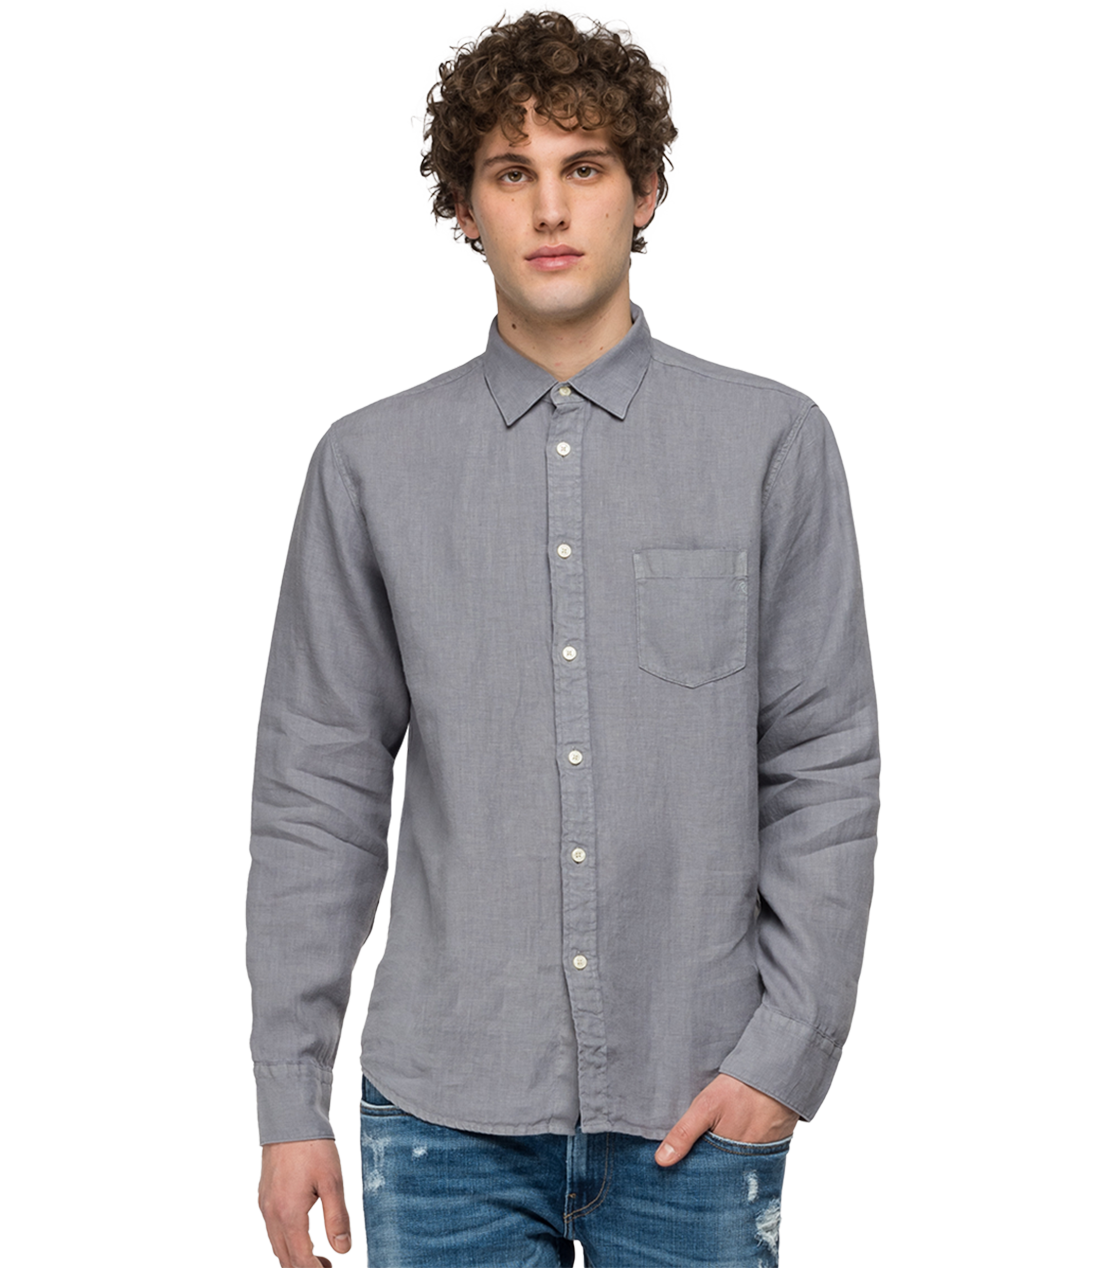 Linen-Shirt-With-Pocket-Greyazure-M4053-.000.81388N-079 – Replay Jeans UAE